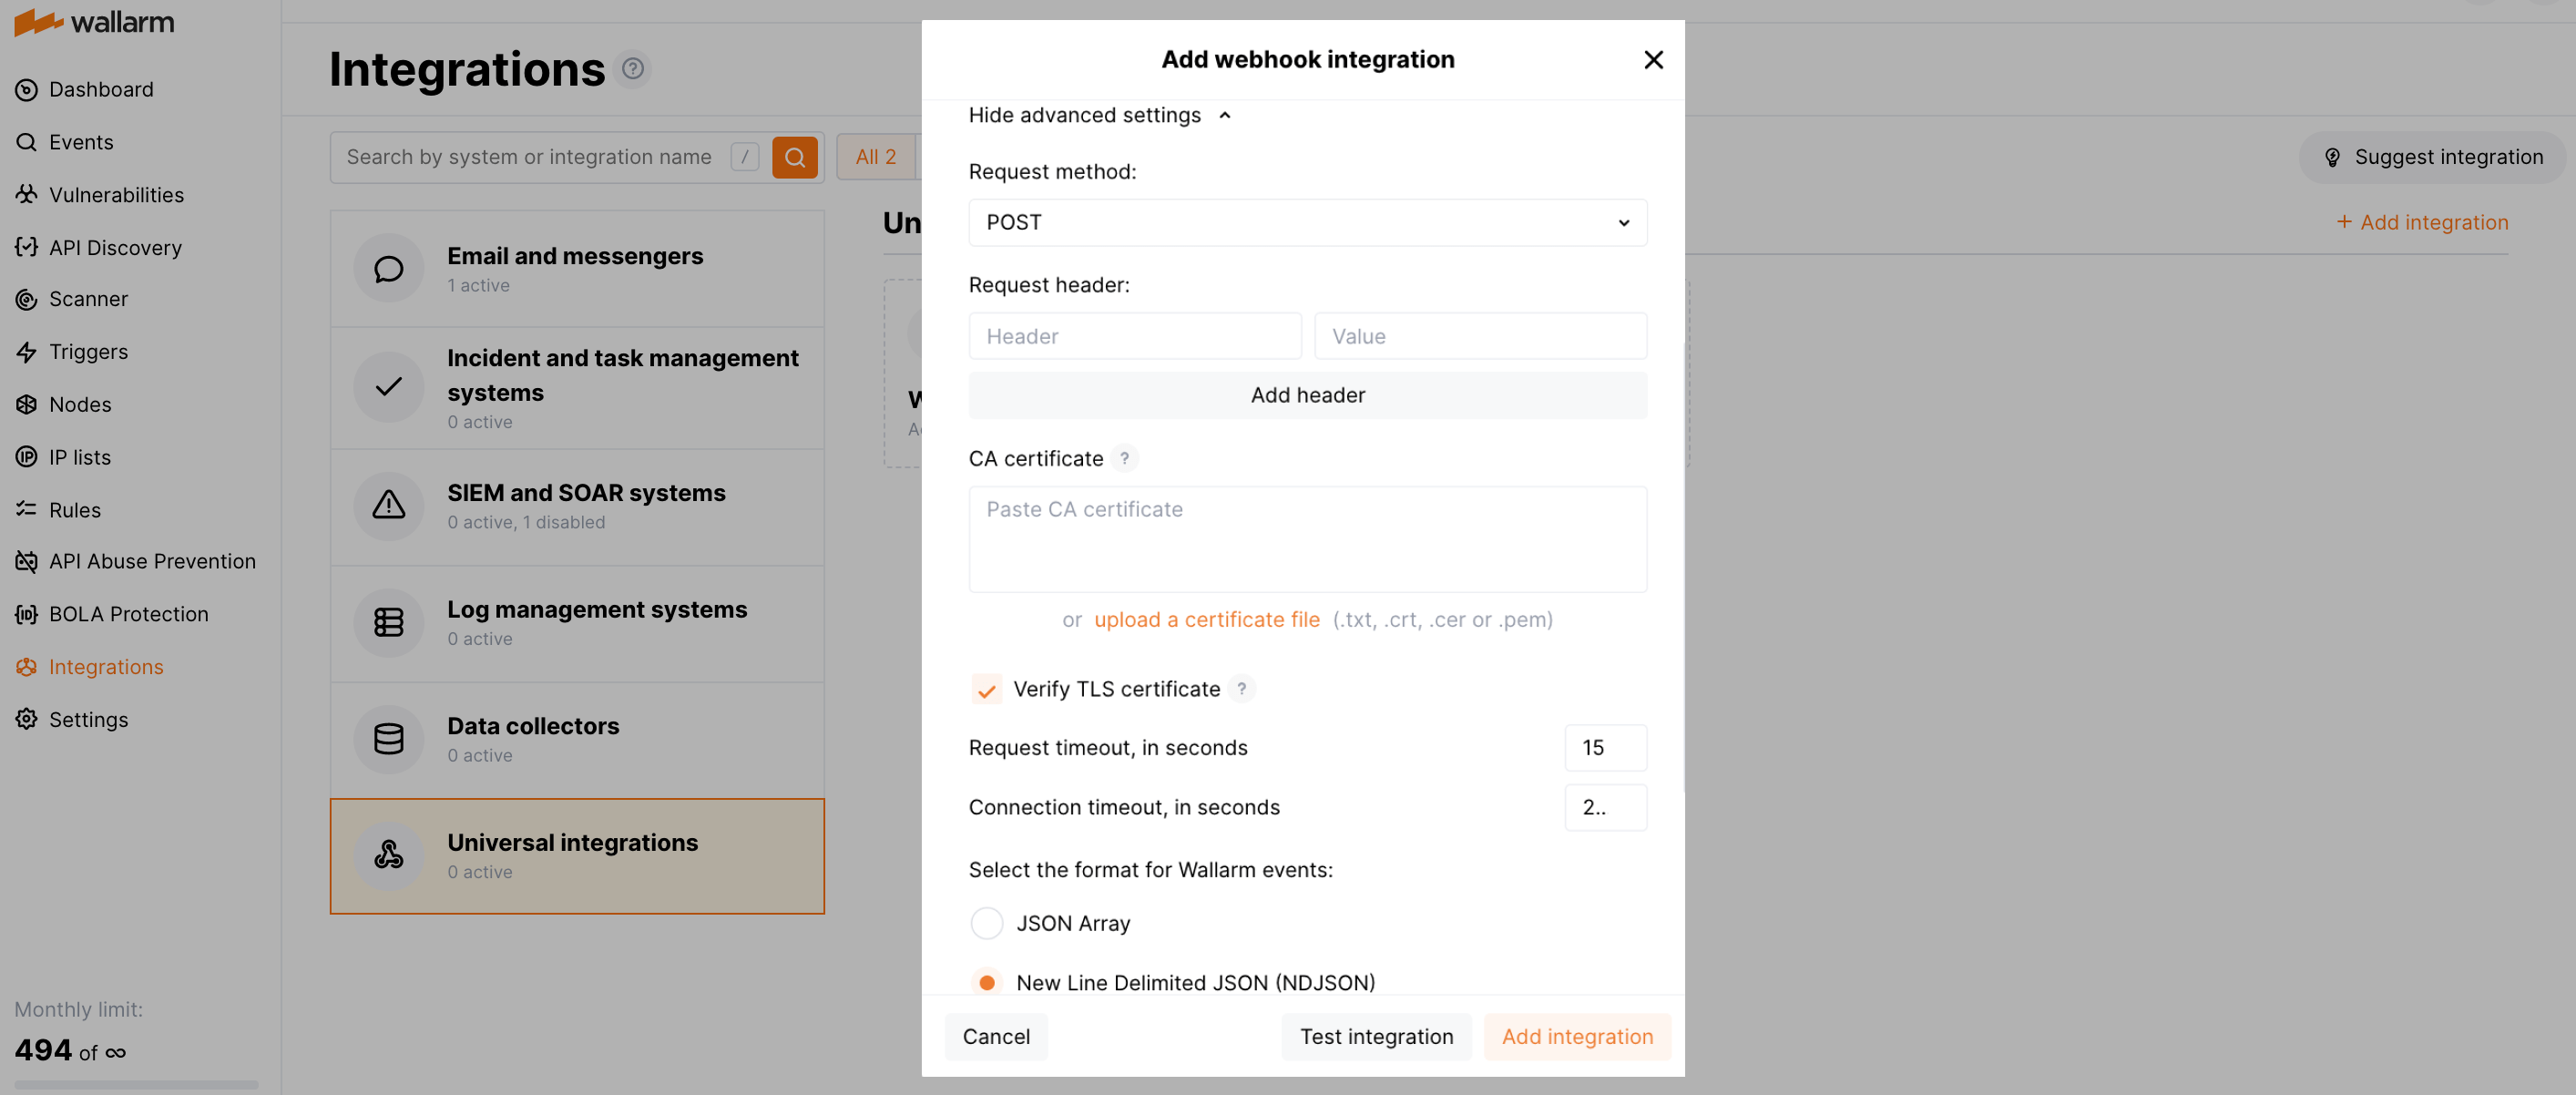 Advanced settings example